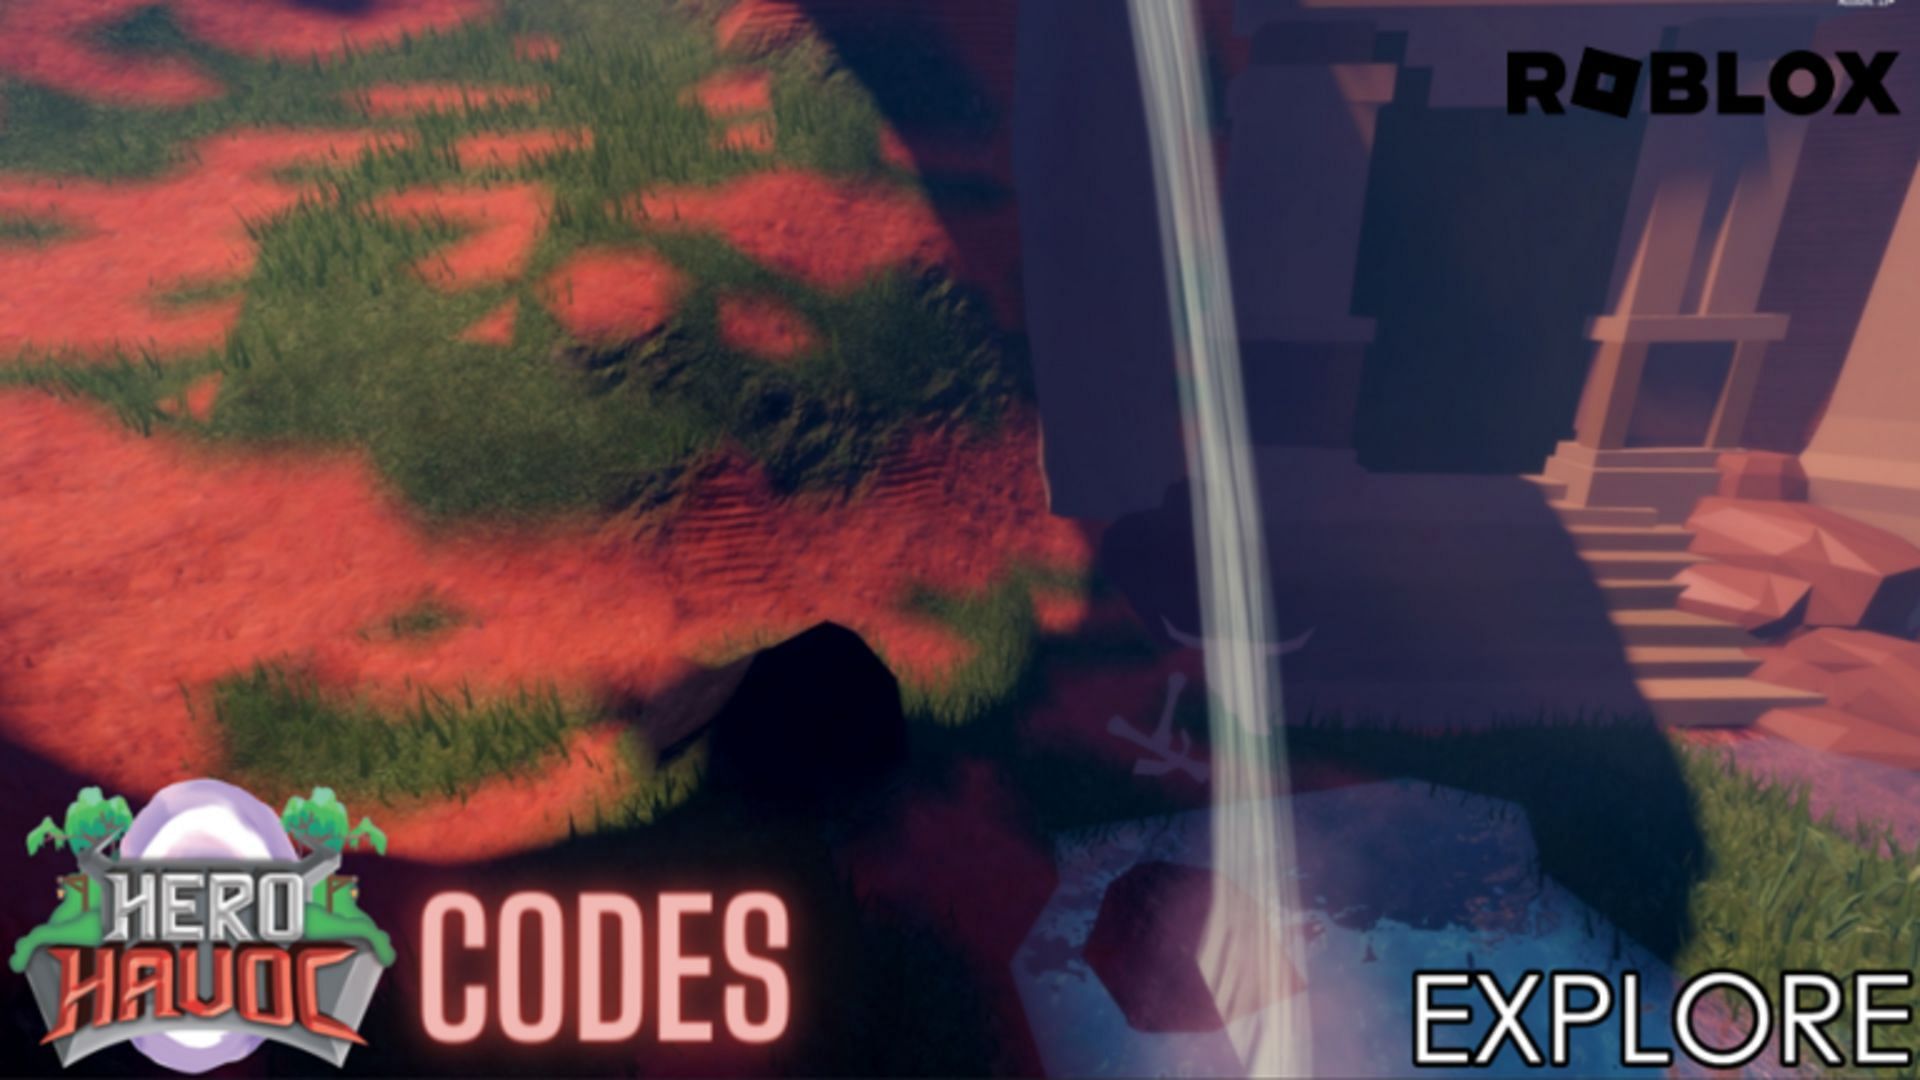 Roblox Cog Simulator code for February 2023: Free Gems